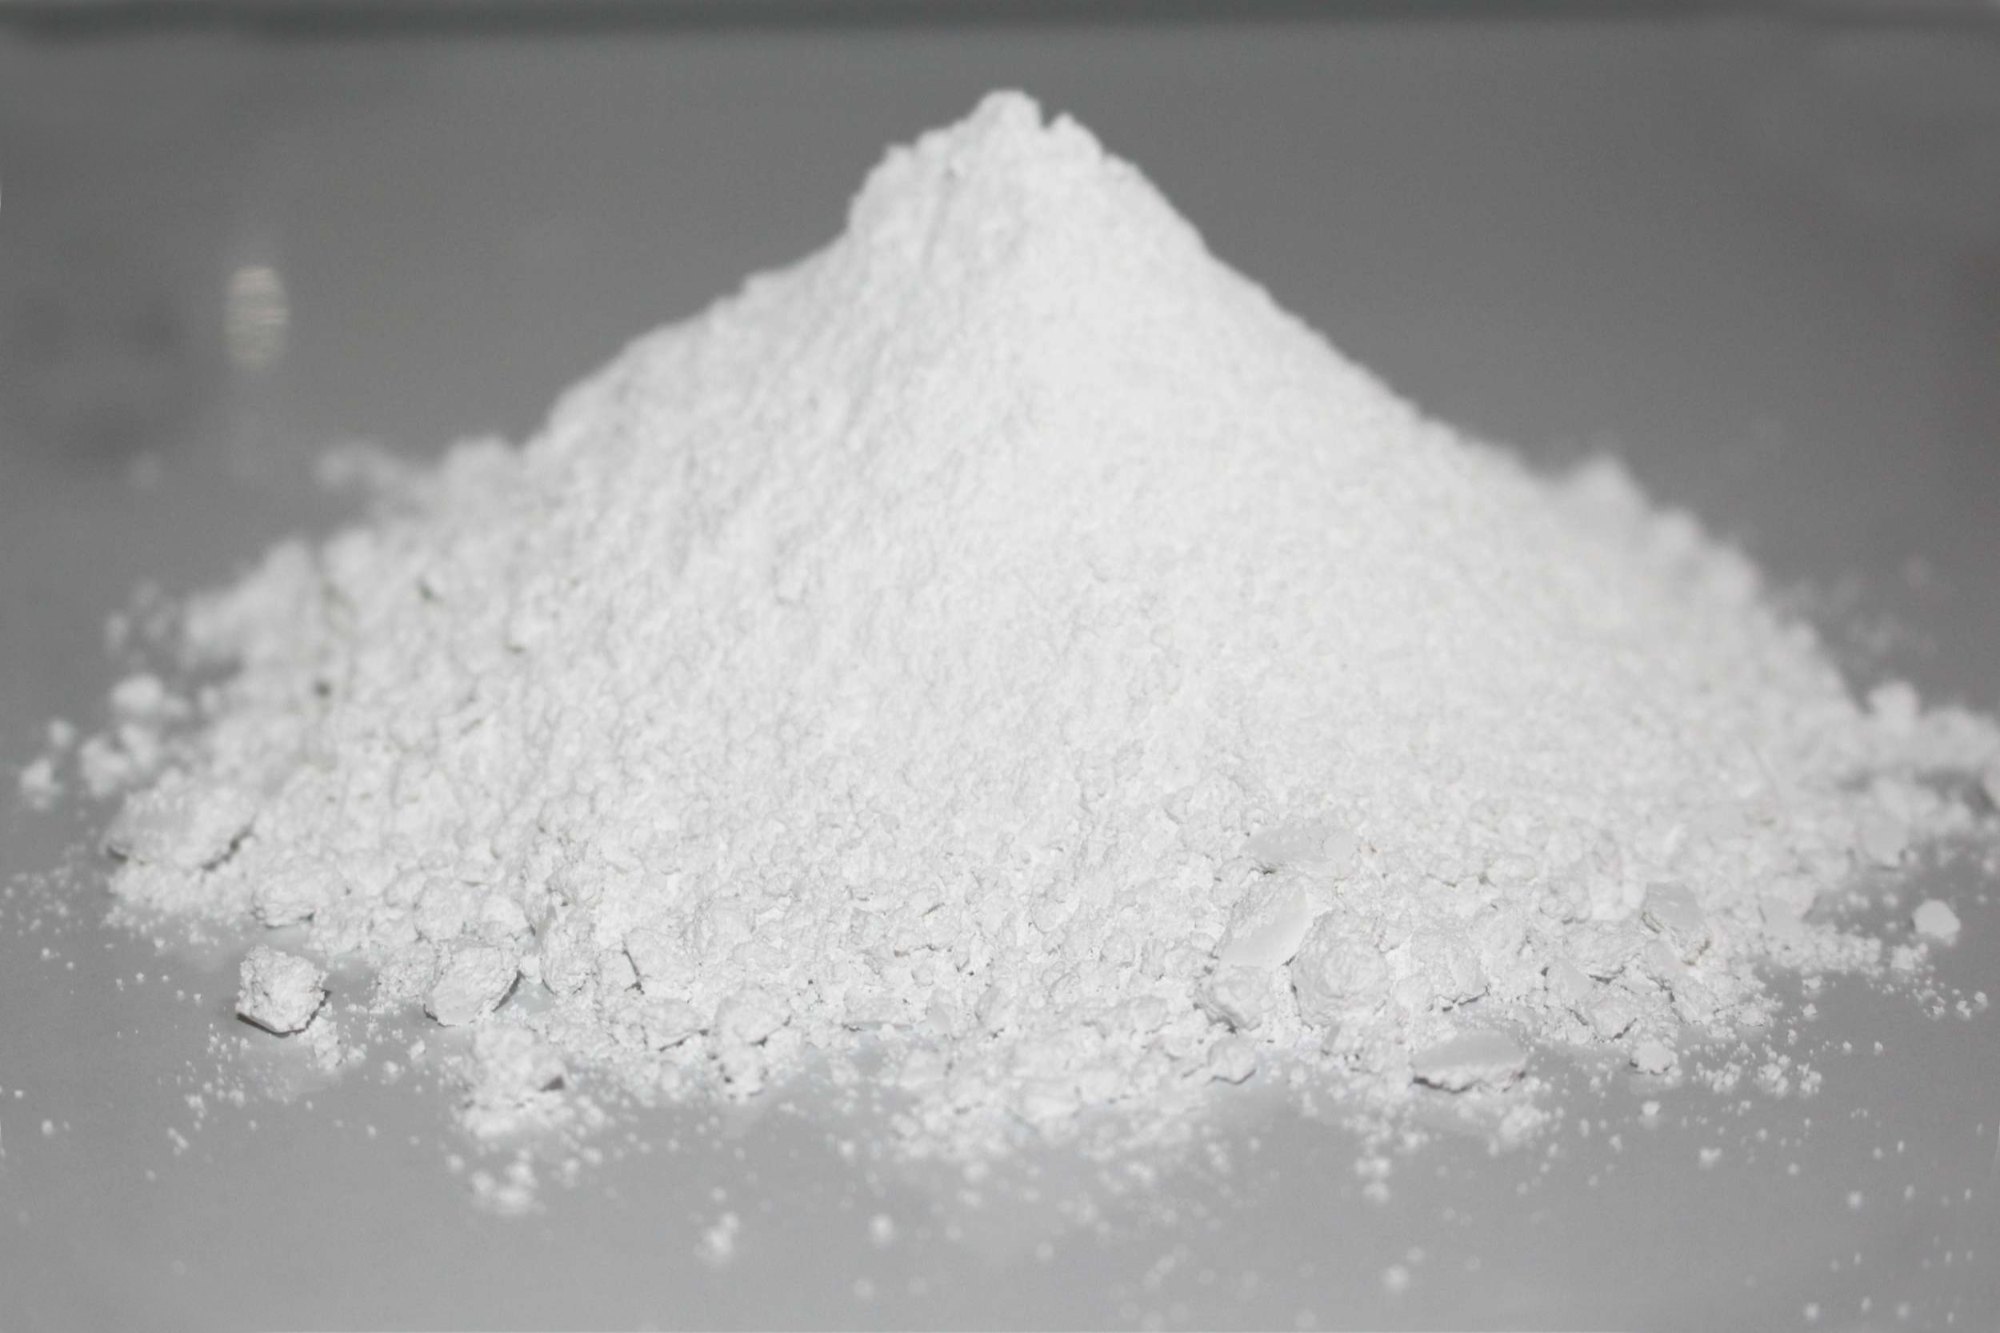 Iran calcium carbonate Manufacturer  Farayand powder - Arkansas - Little Rock  ID1517230